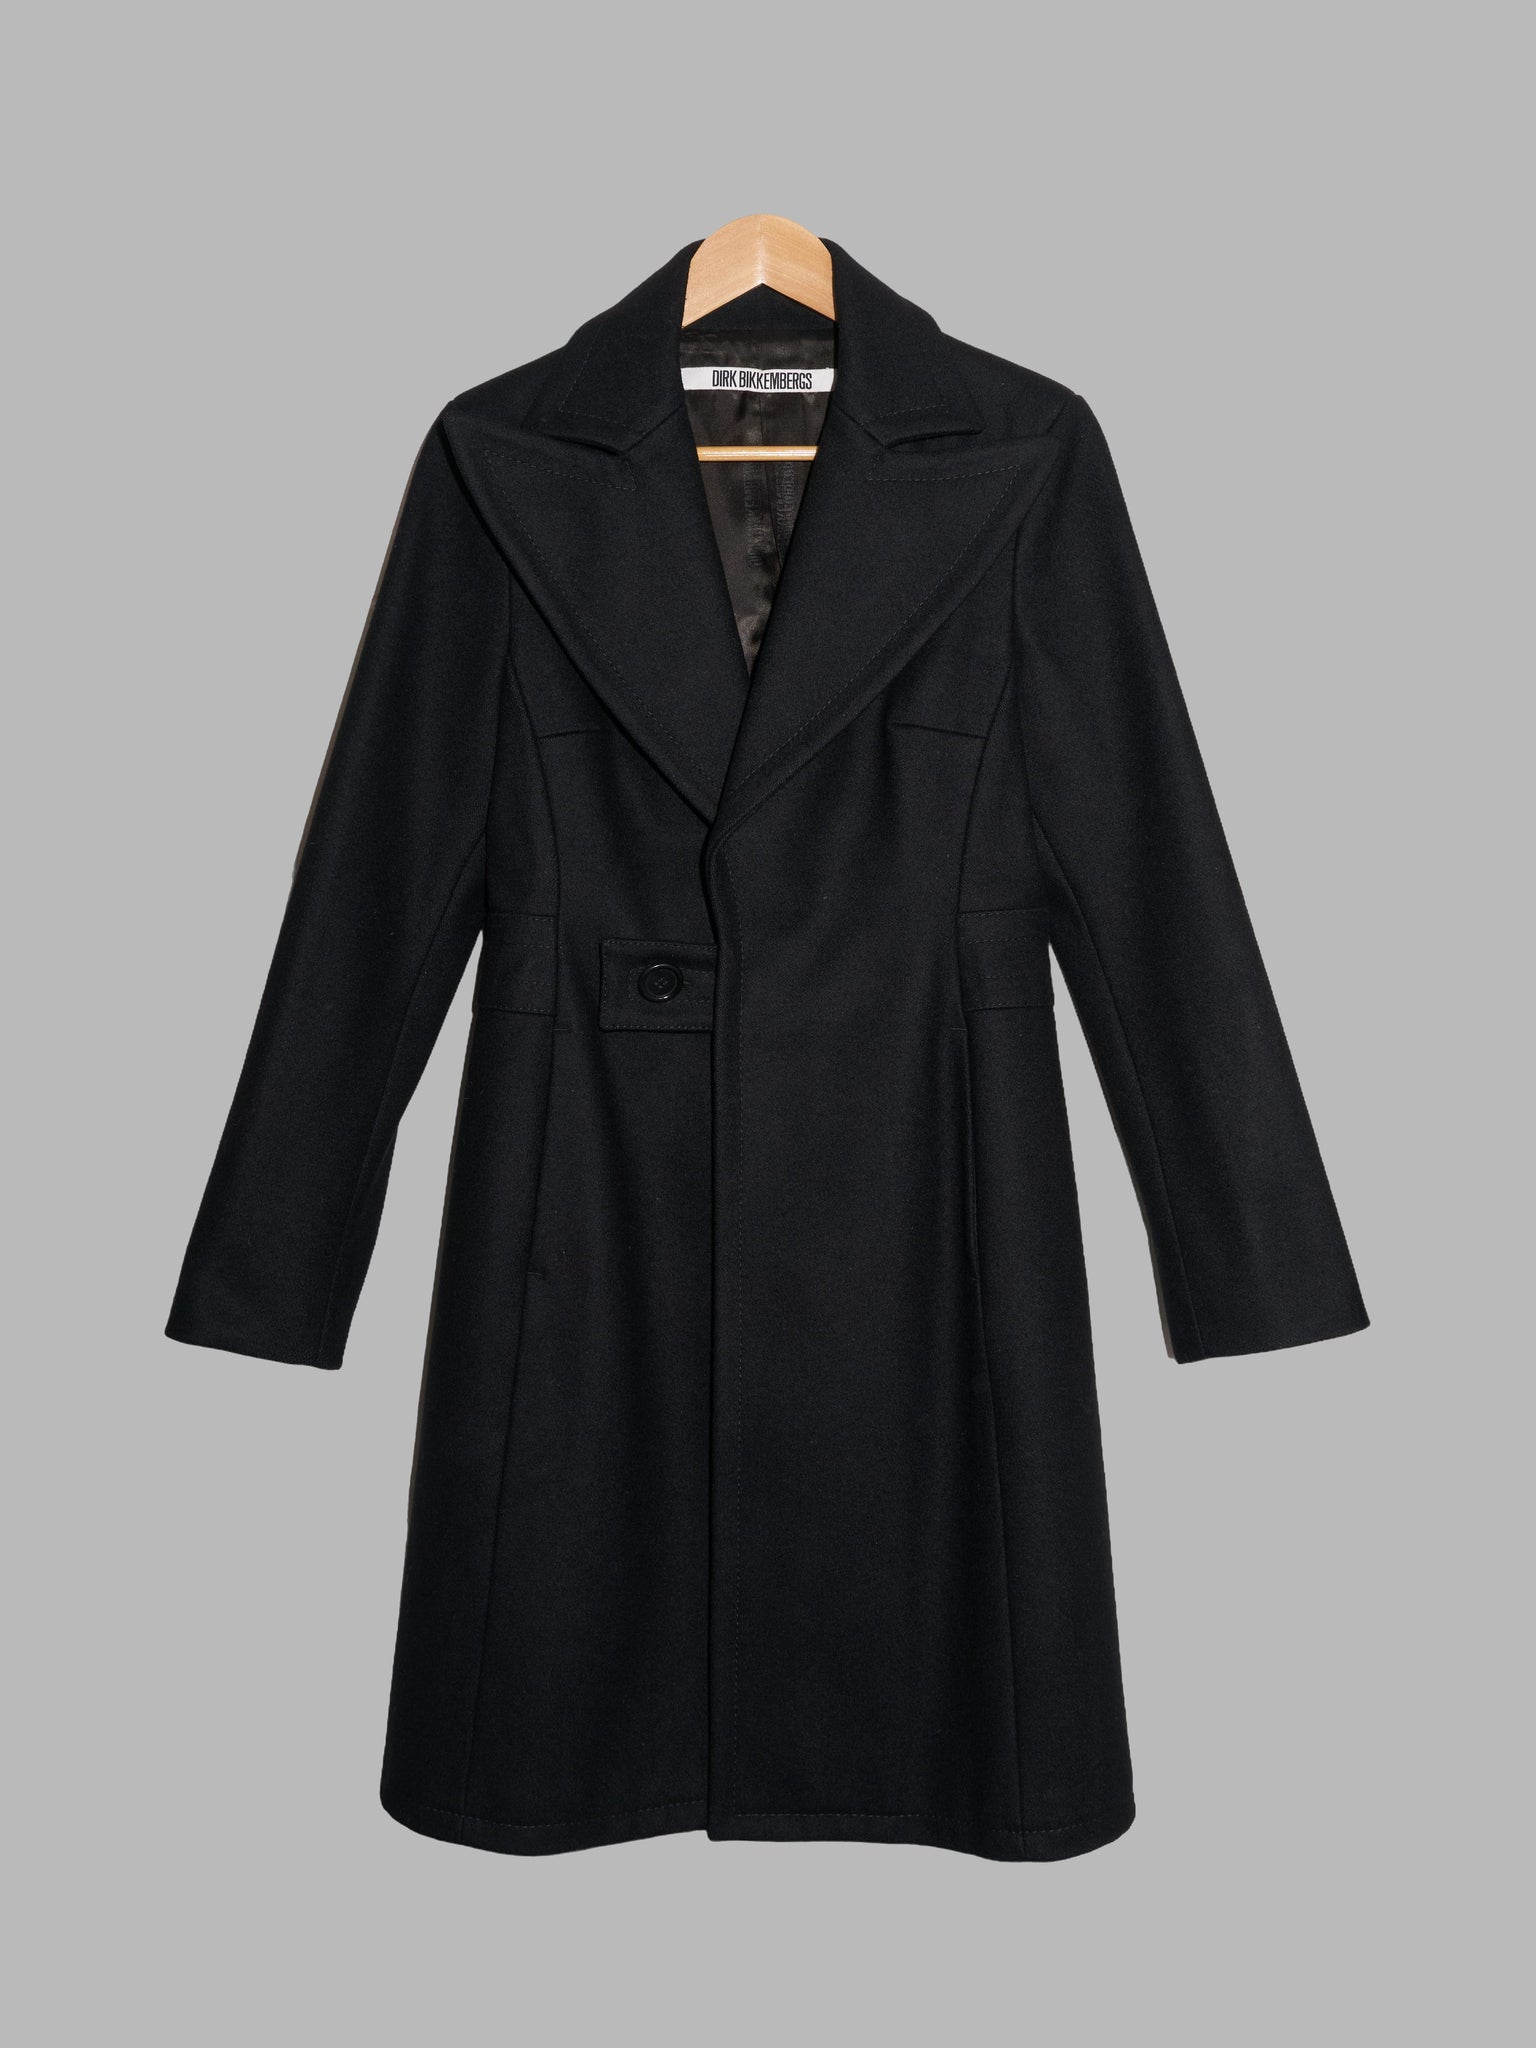 Dirk Bikkembergs 1990s black wool melton large peak lapel coat - size 40